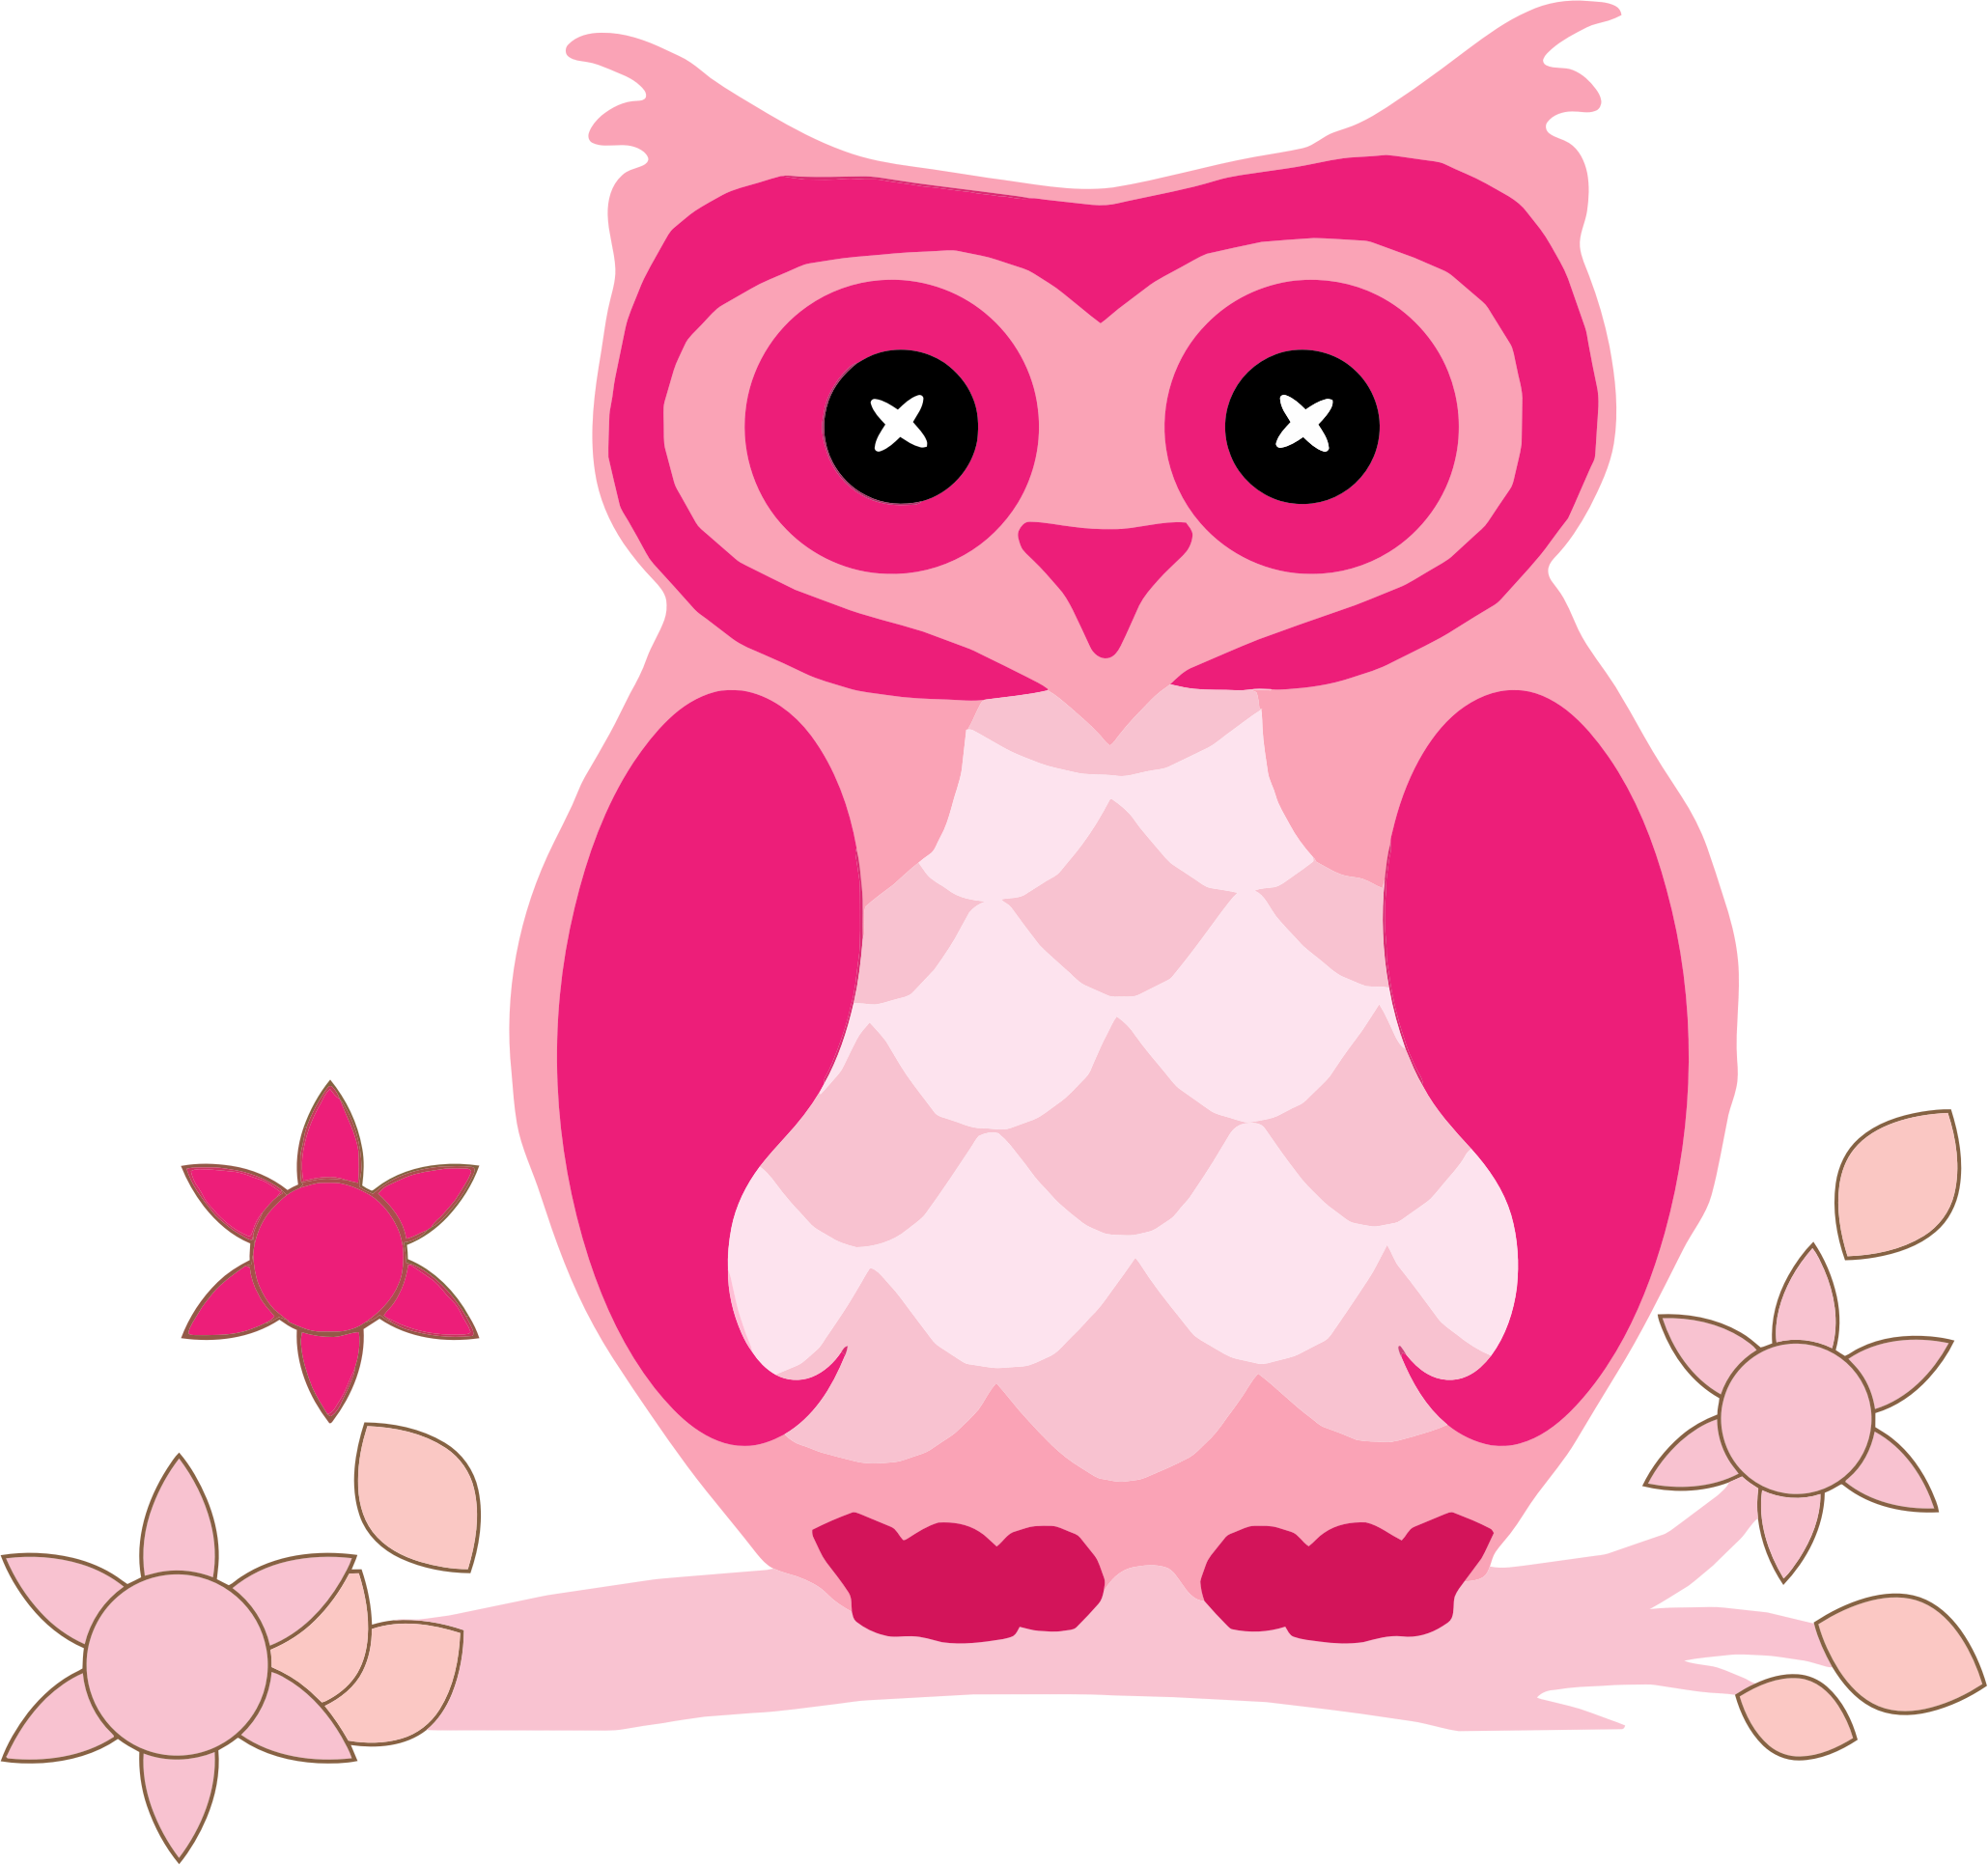 Owl big image png. Owls clipart pink